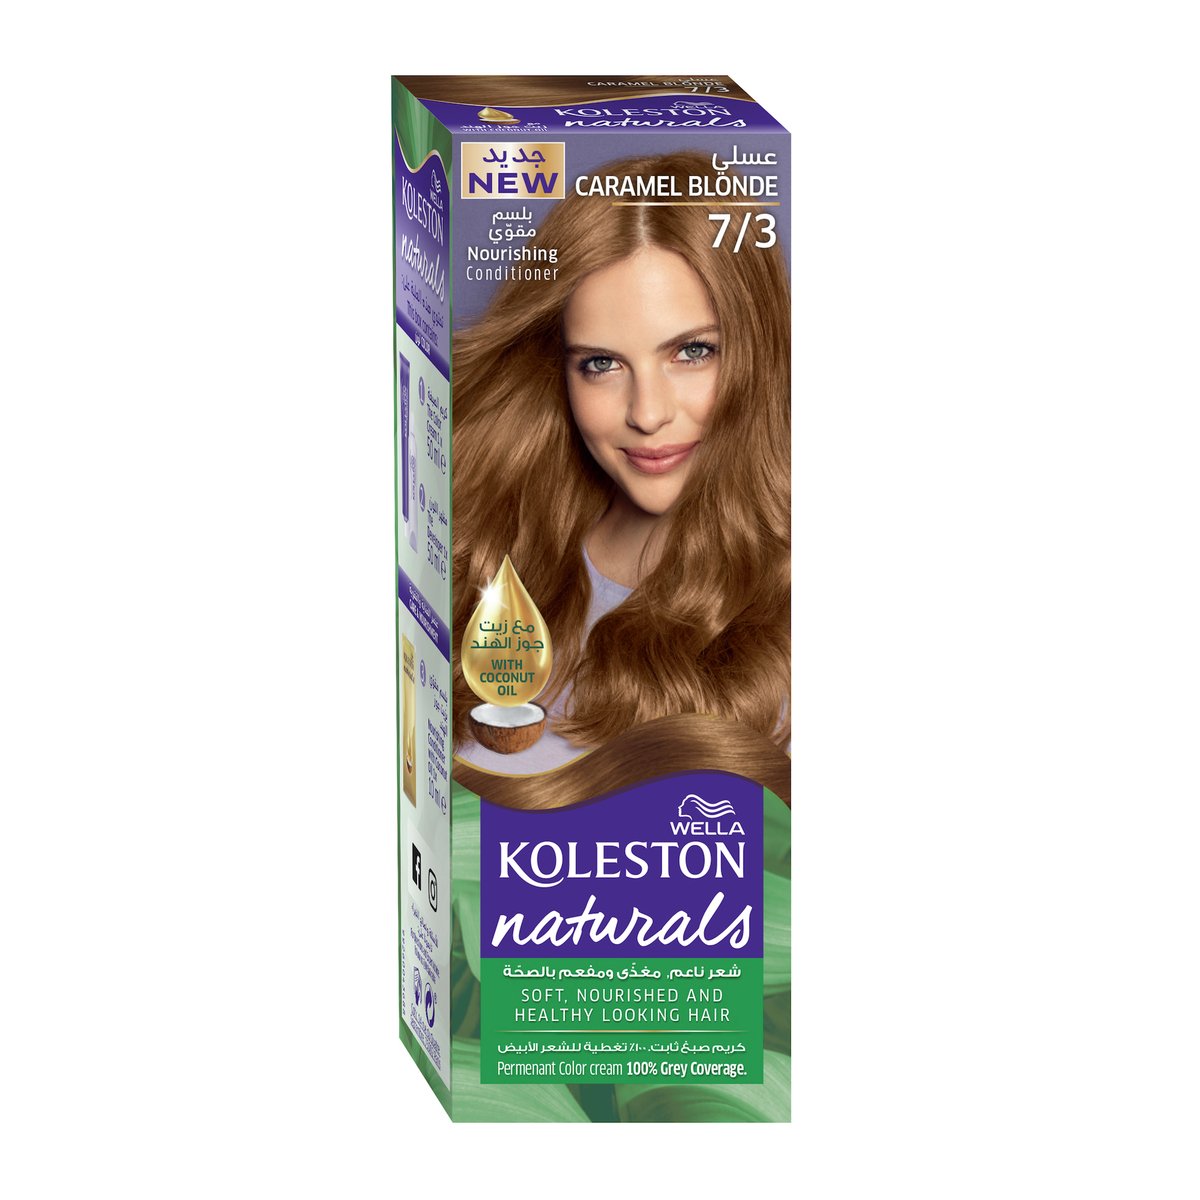 Koleston Naturals Caramel Blonde 7/3 1pkt